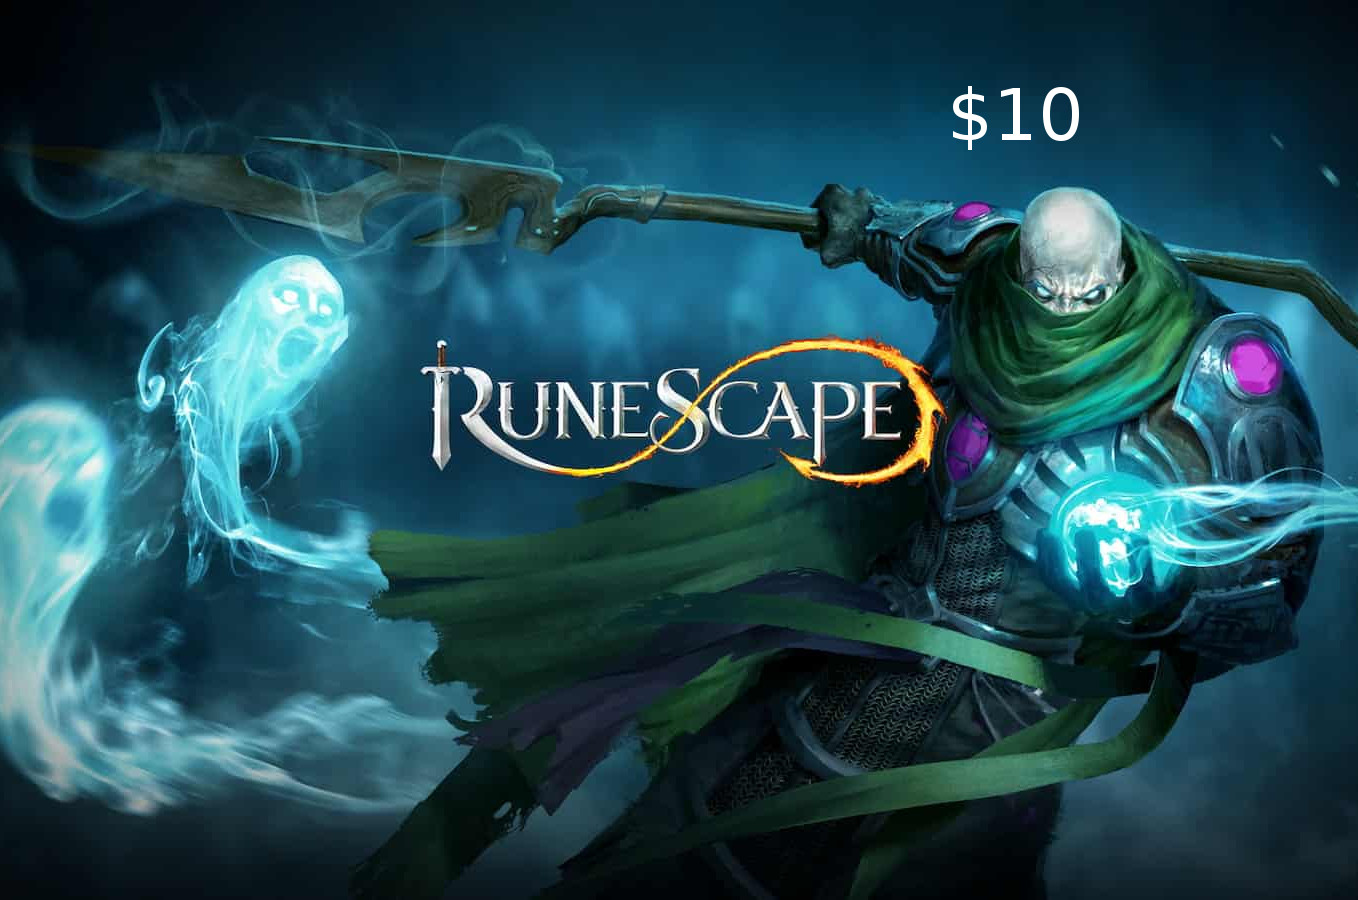 Runescape $10 Prepaid Game Card $10.11